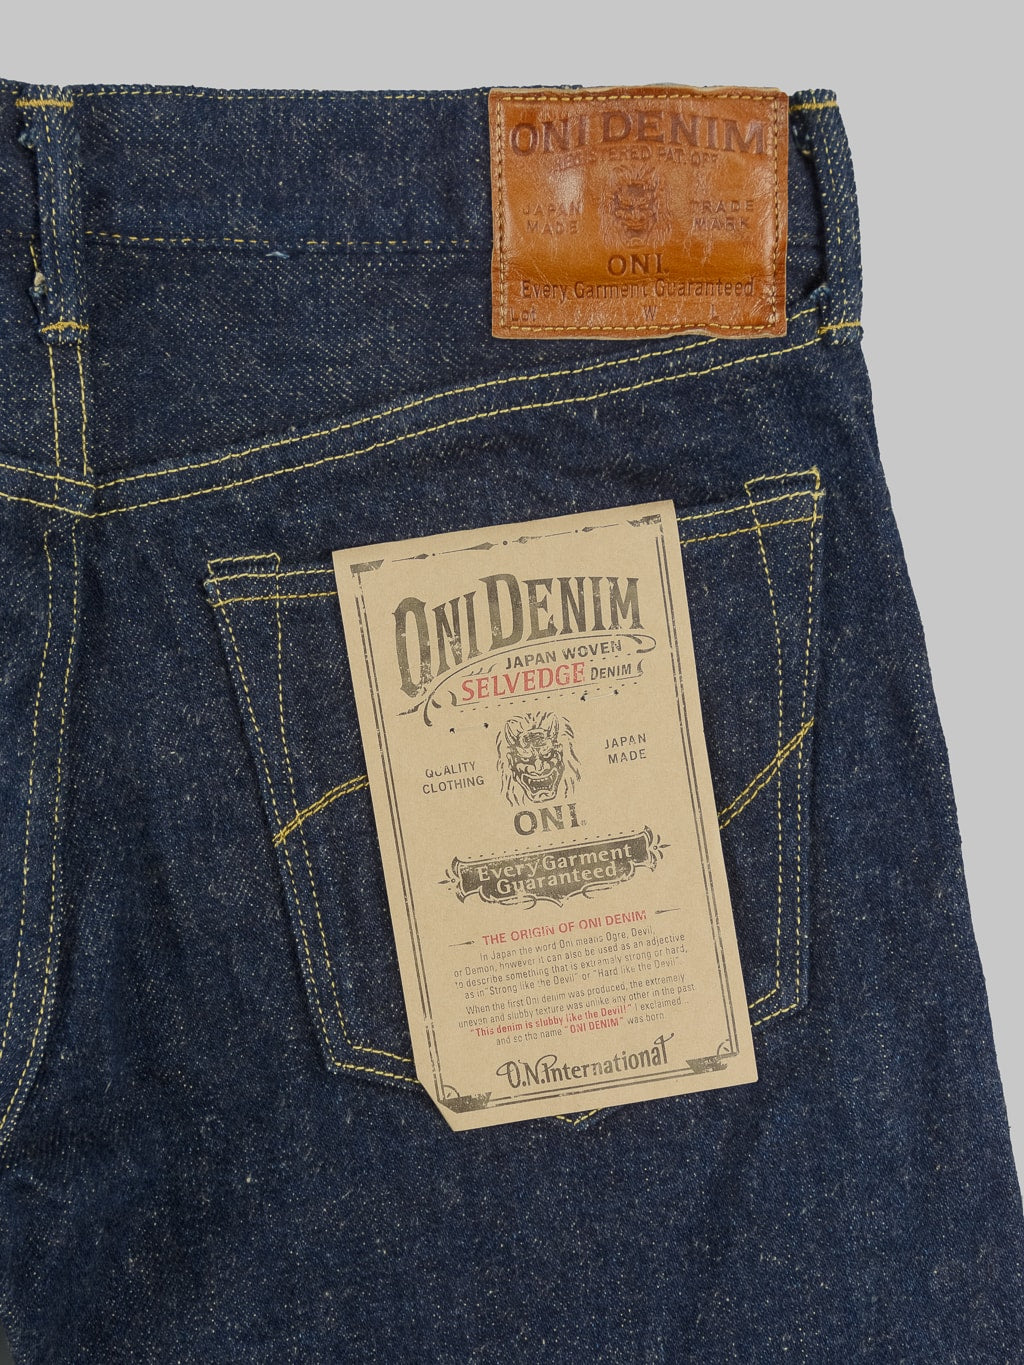 ONI Denim 288ZR Secret Denim 20oz Regular Straight Jeans details